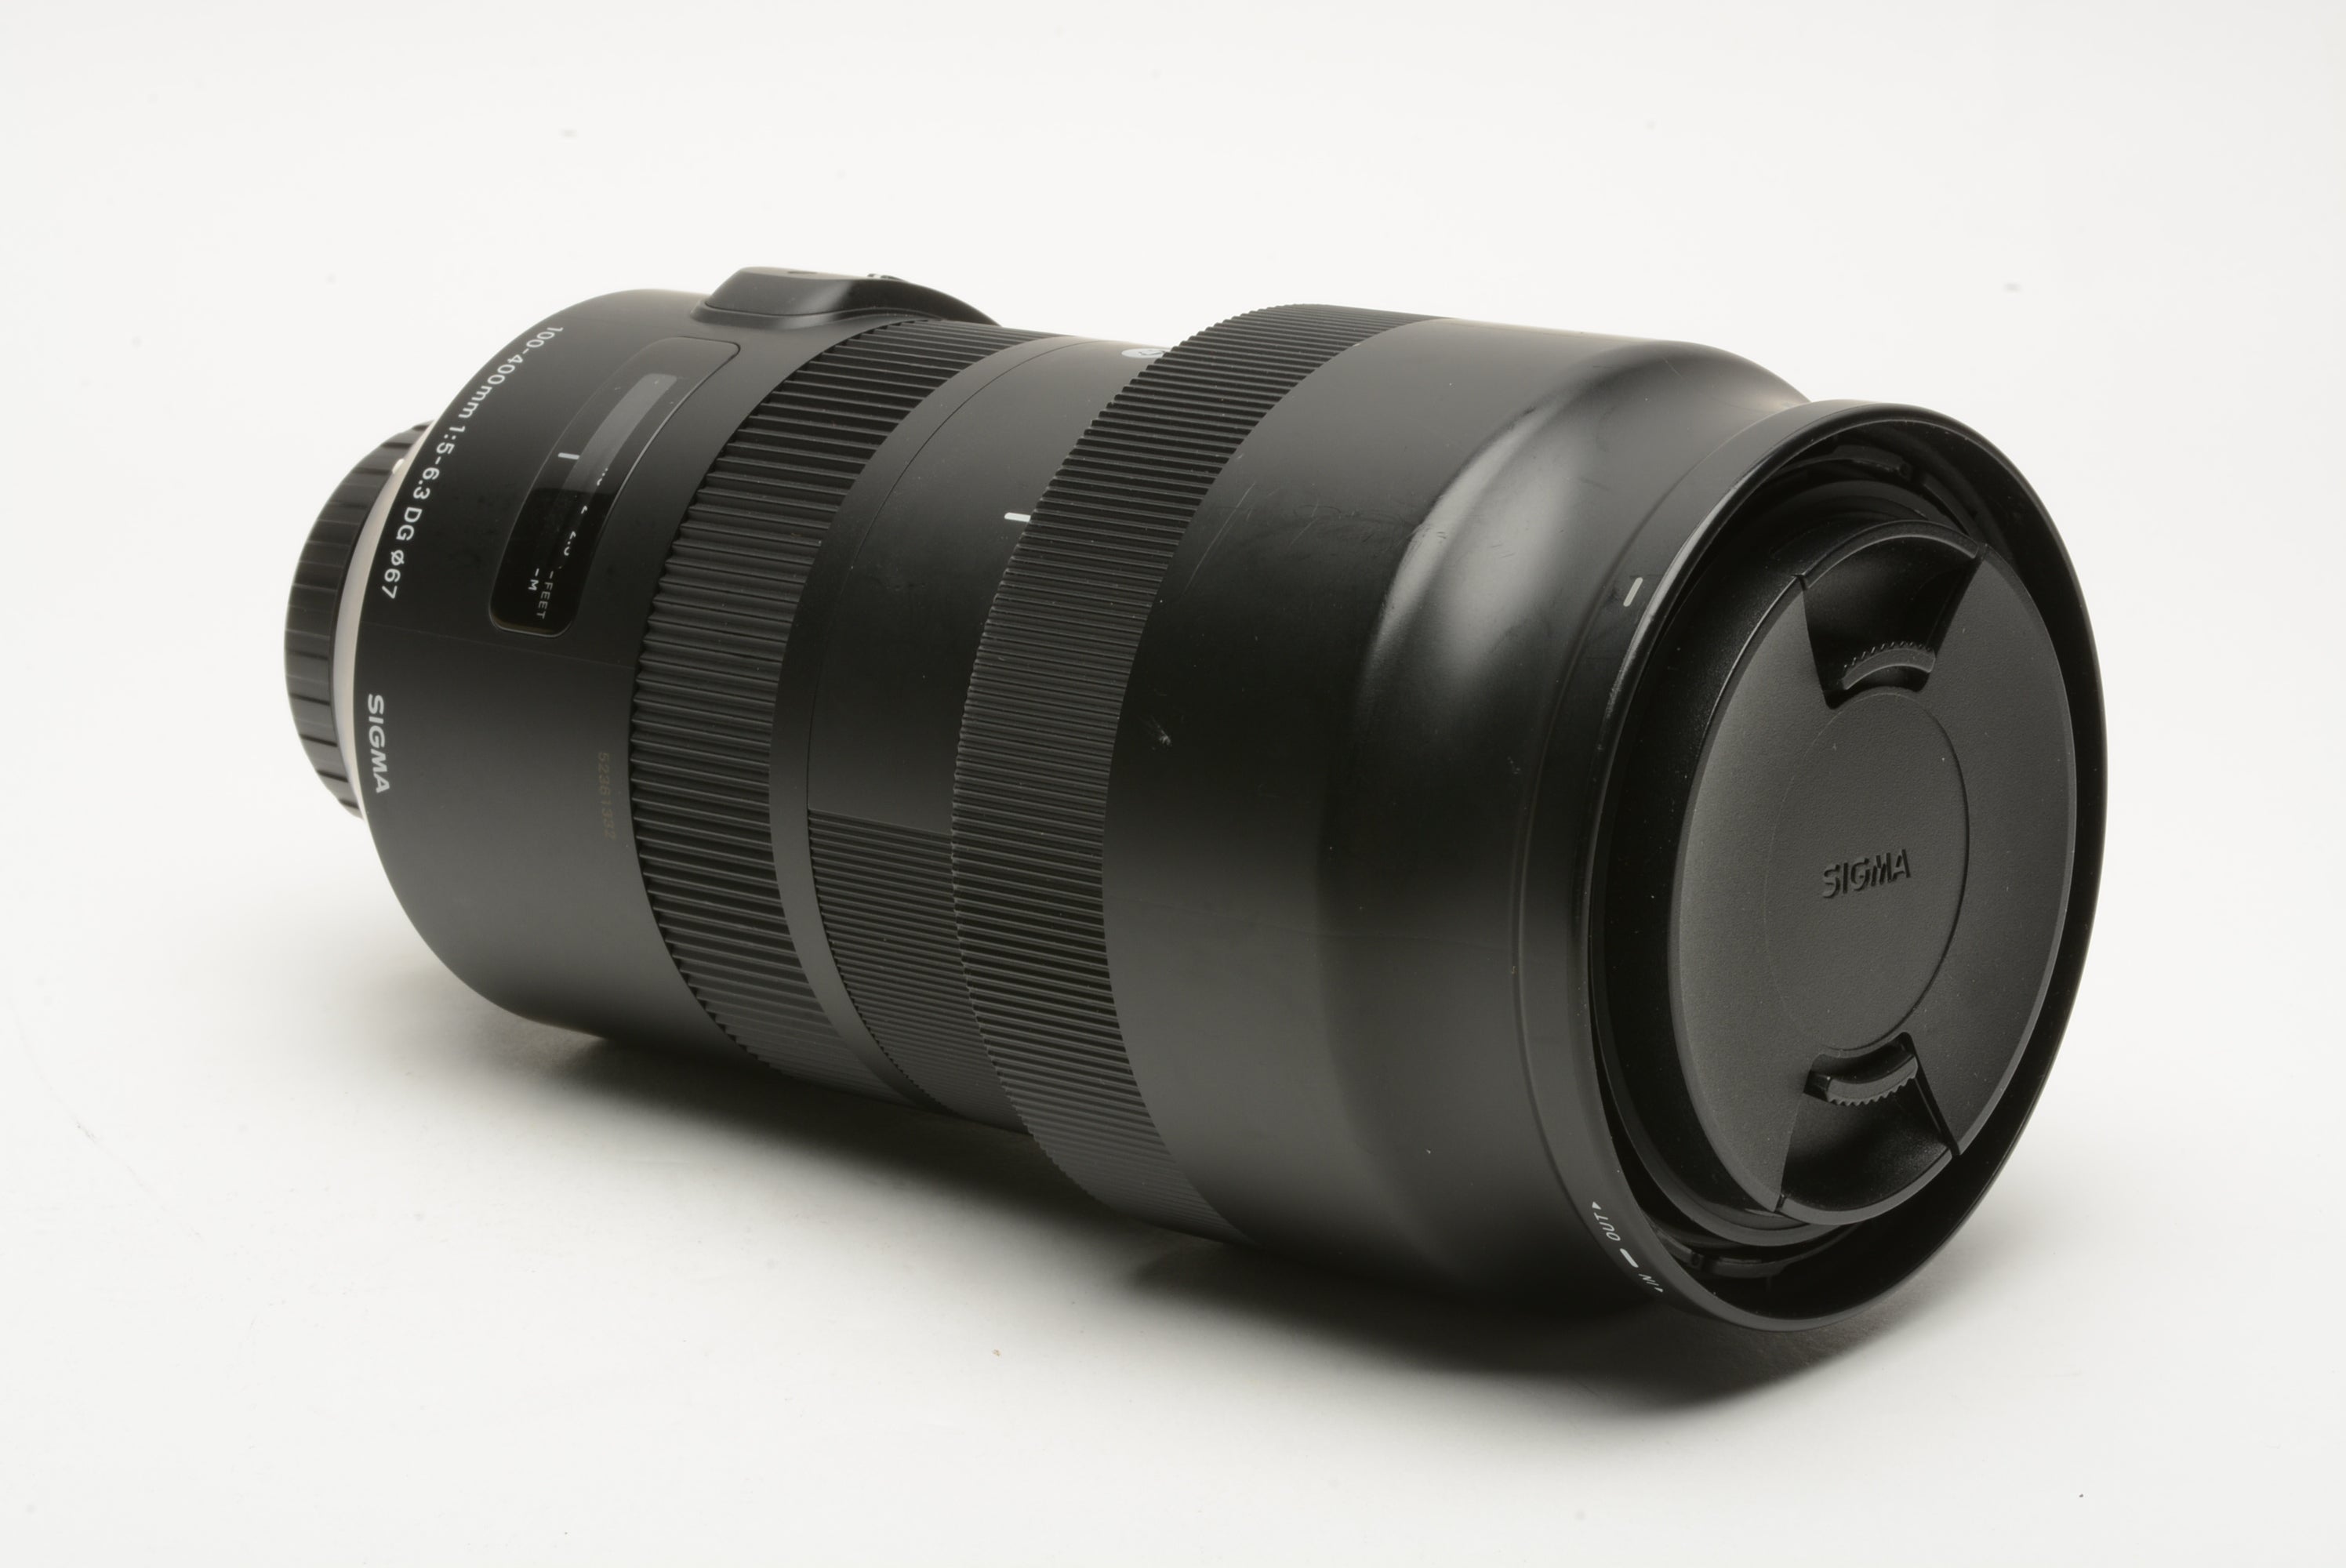 SIGMA 100-400mm F5-6.3 DG OS HSM | Contemporary C017 | Nikon F-FX